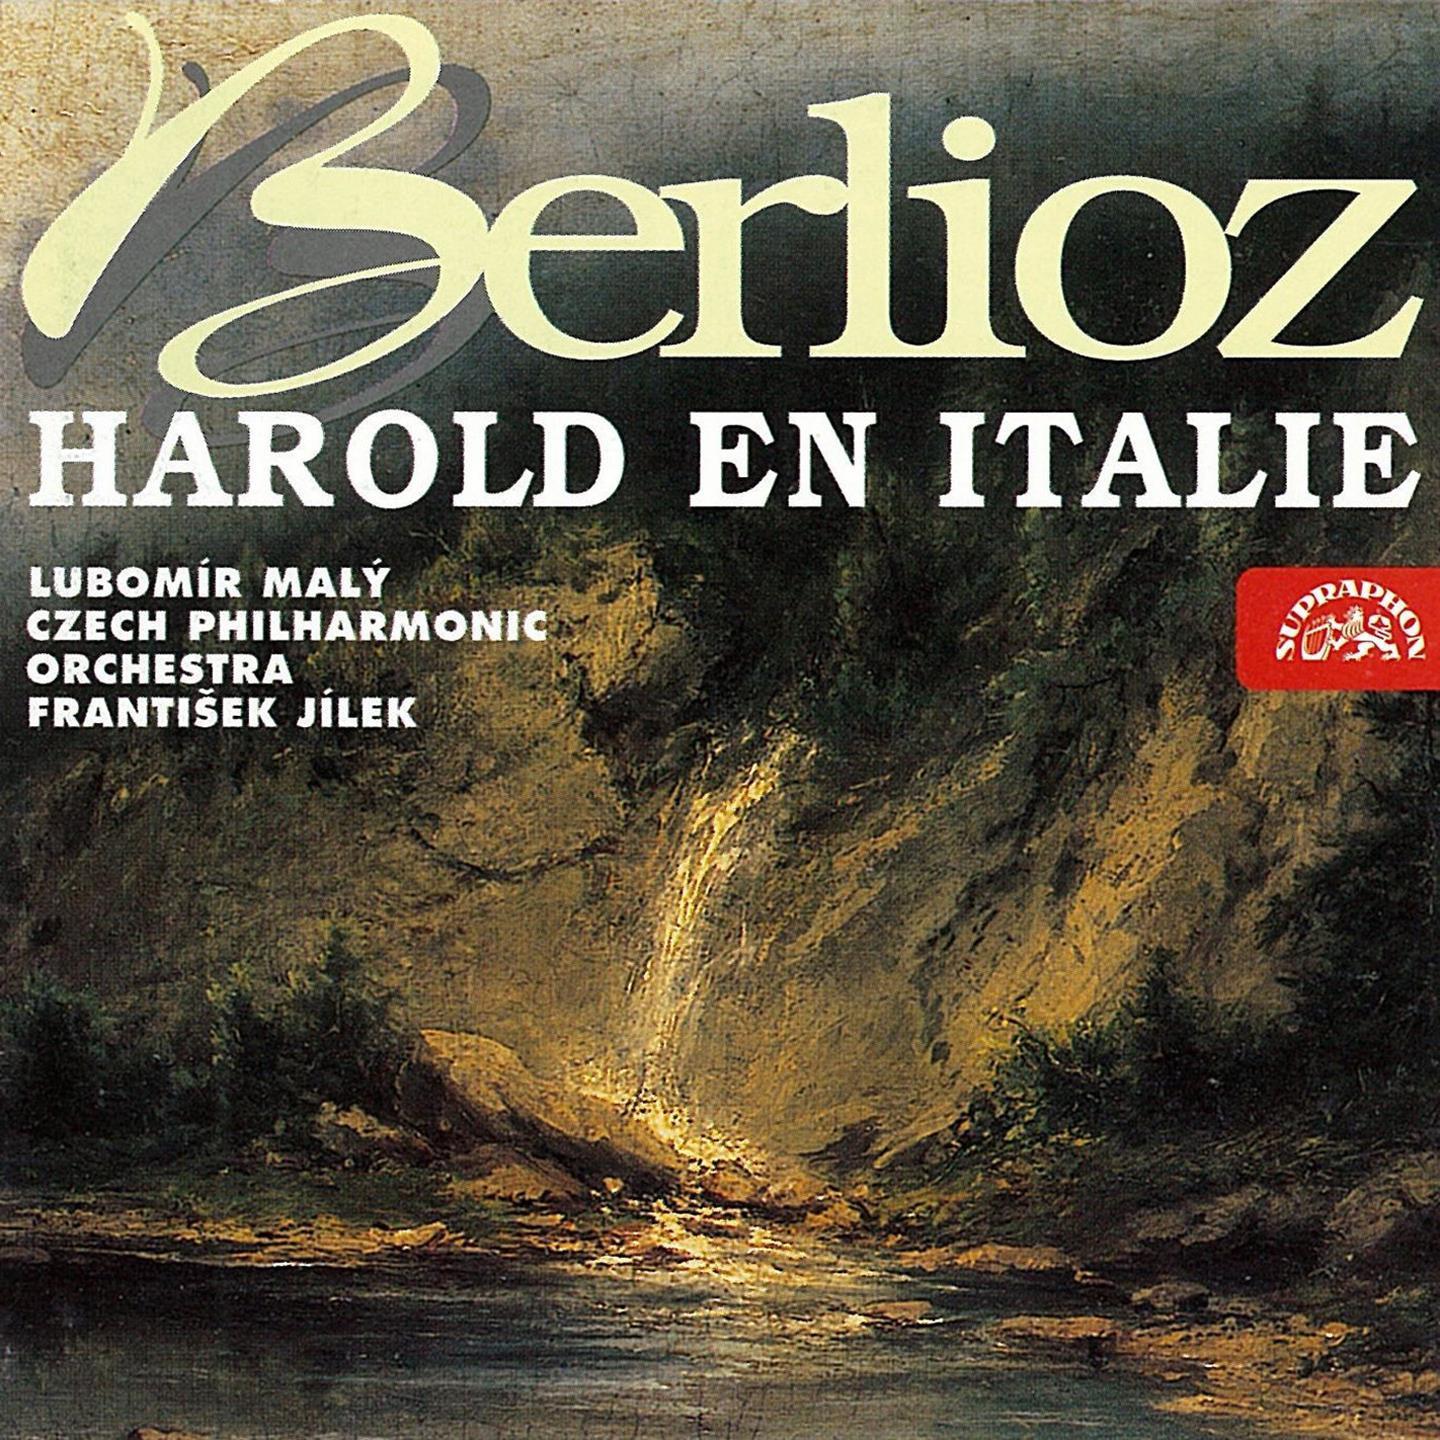 Harold en Italie in G Major, Op. 16, H 68: II. Marche de pe lerins, chantant la prie re du soir